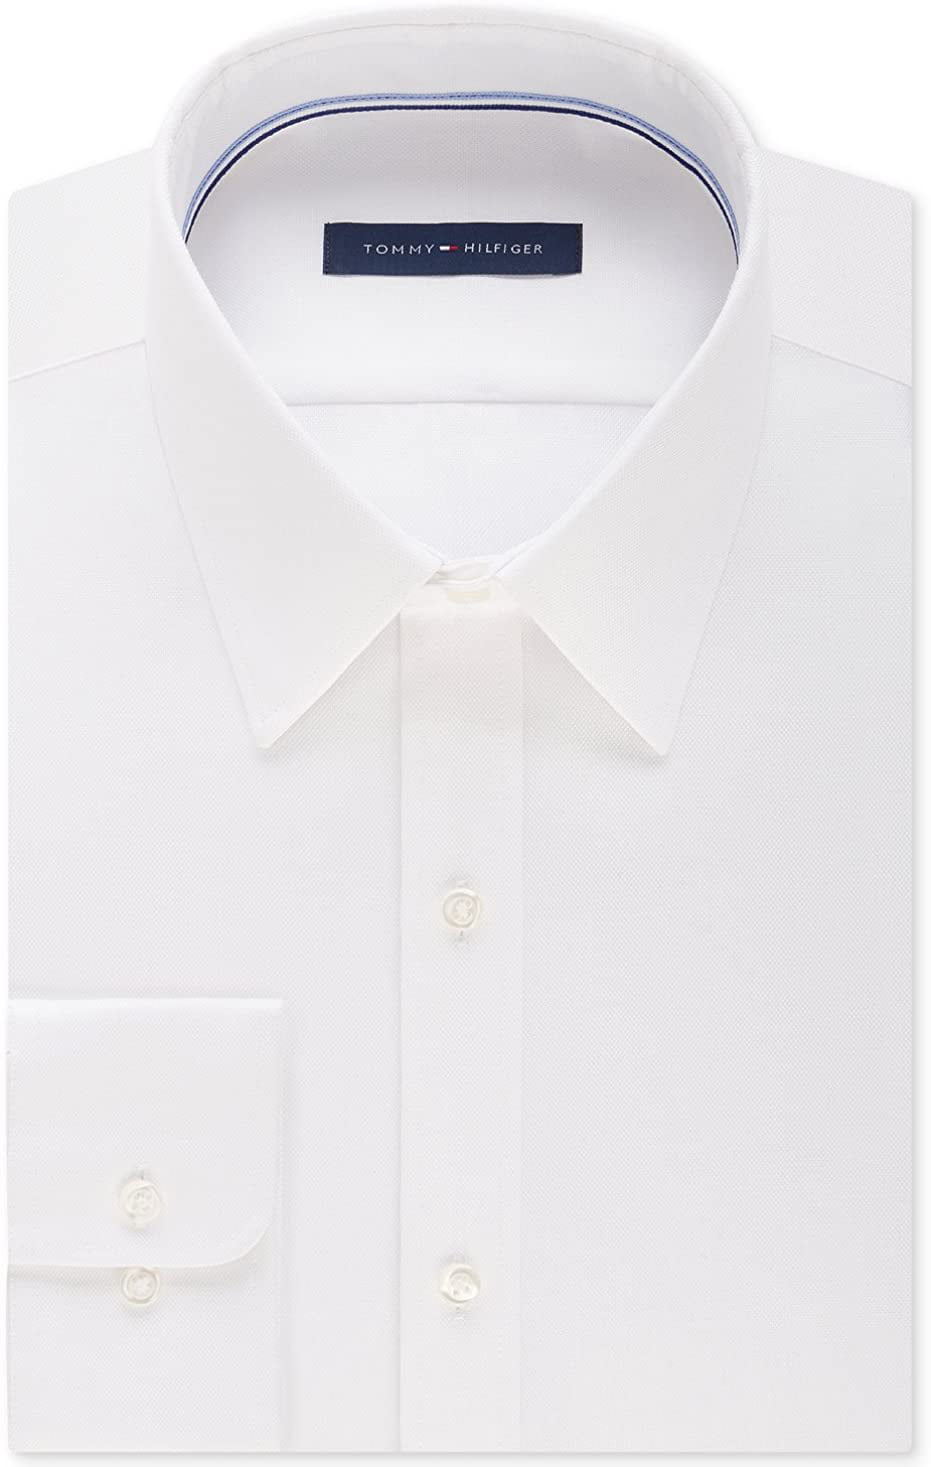 Tommy Hilfiger Men's Regular Fit Spread Collar Long Sleeve Dress Shirt 